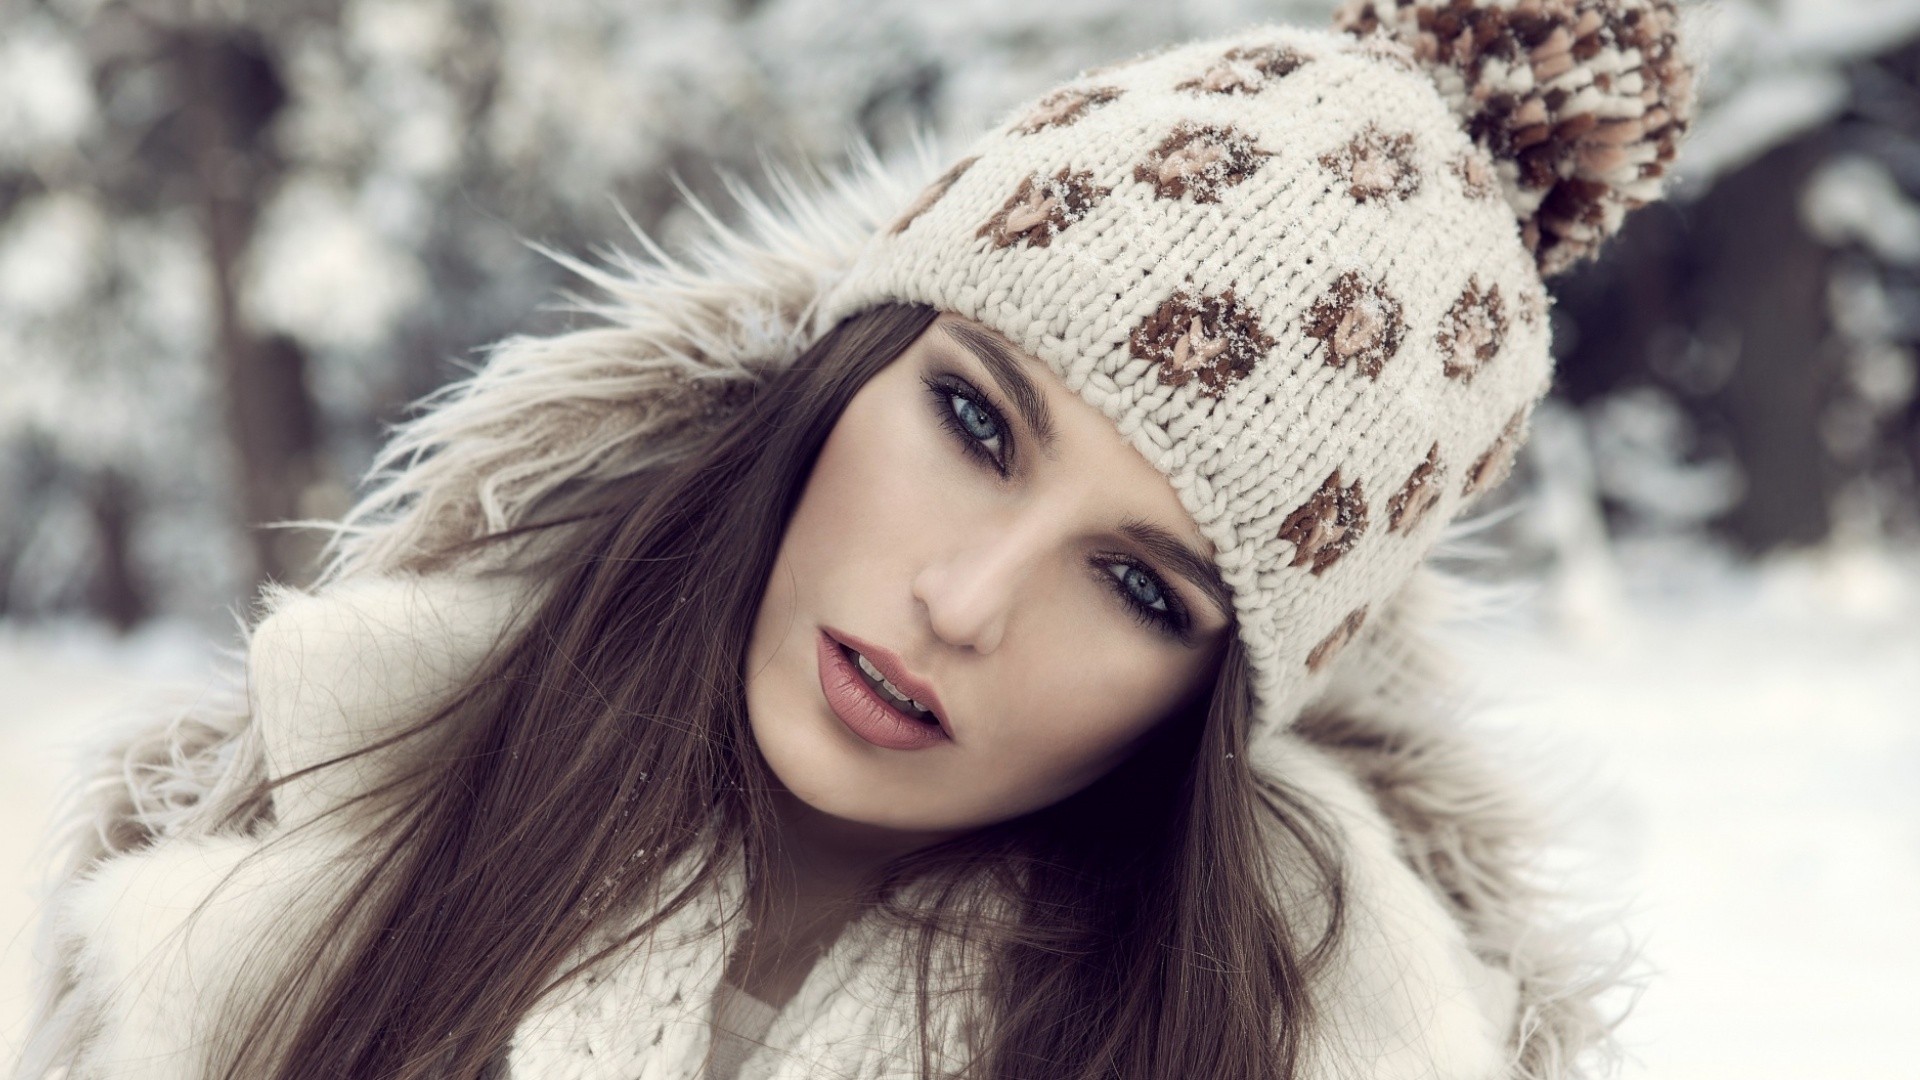 Blue Eyes Winter Face Long Hair Fur Coats Snow Brunette Open Mouth Model Cape Scarf White Coat White 1920x1080